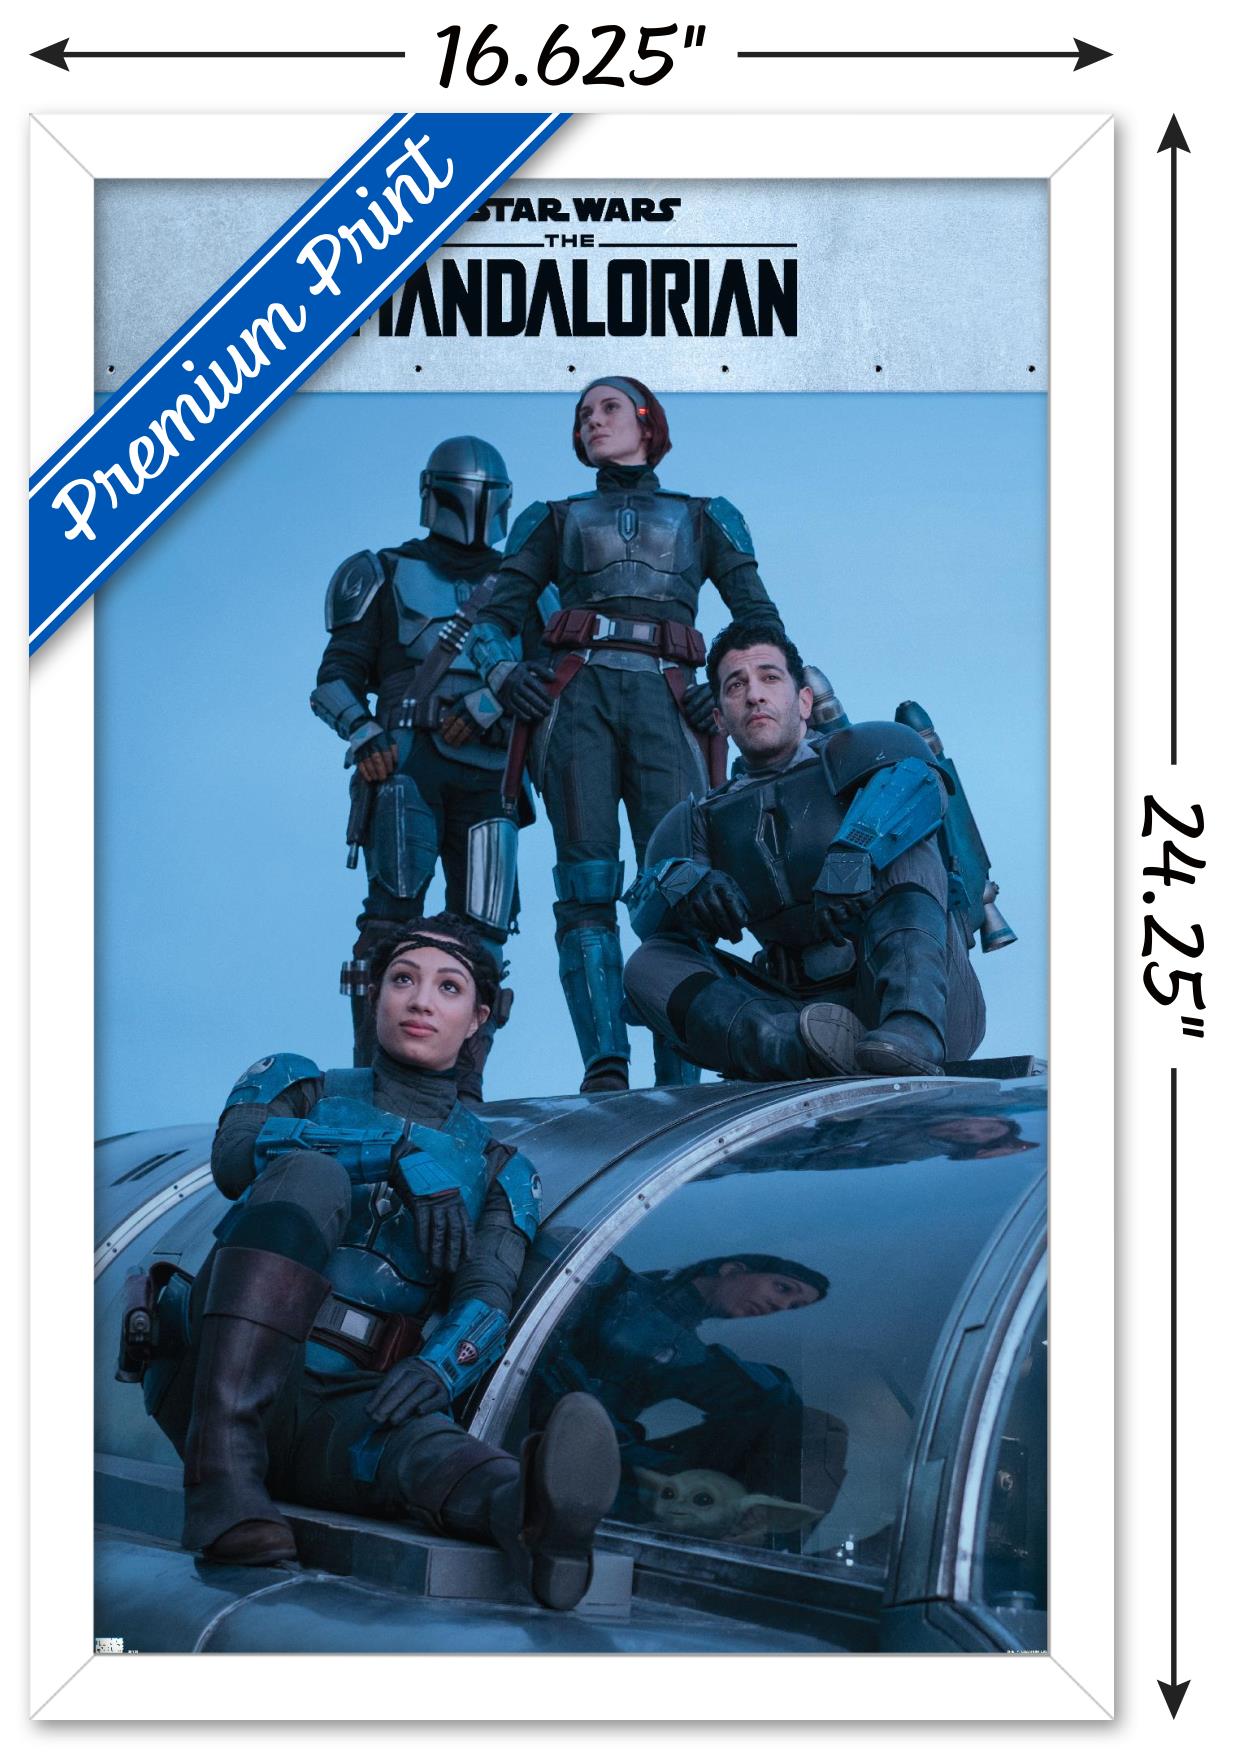 Star Wars: The Mandalorian Season 2 - Mandalorian Group Wall Poster, 14.725" x 22.375", Framed - image 3 of 5